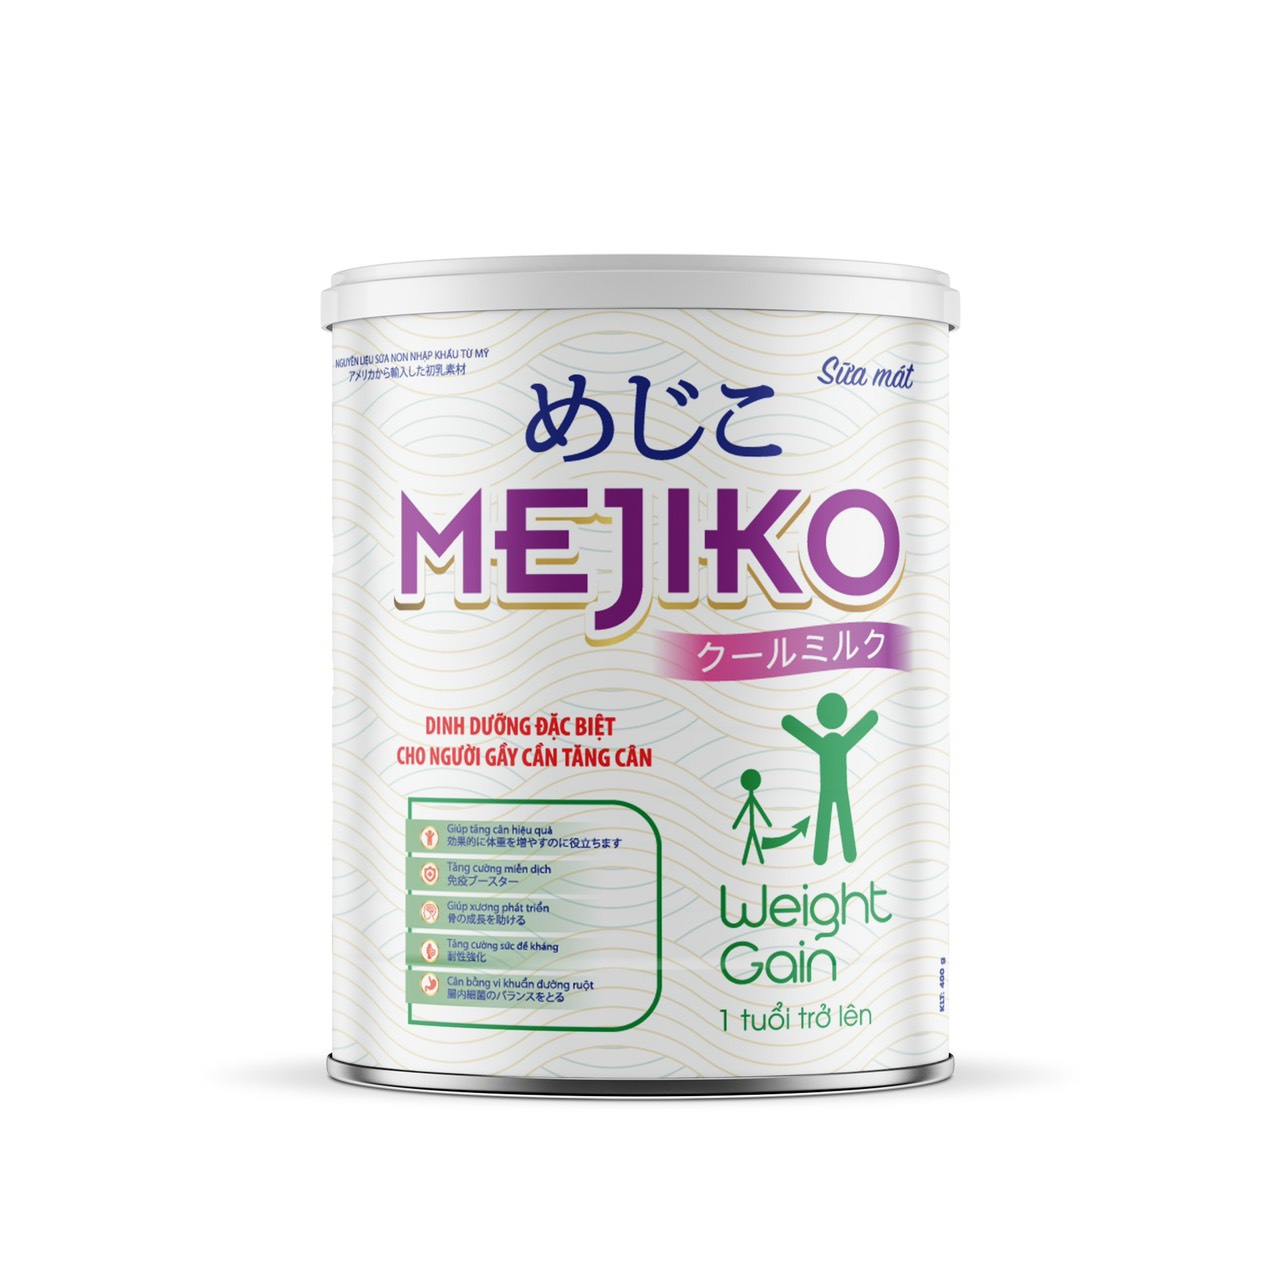 Mejiko Weight Gain